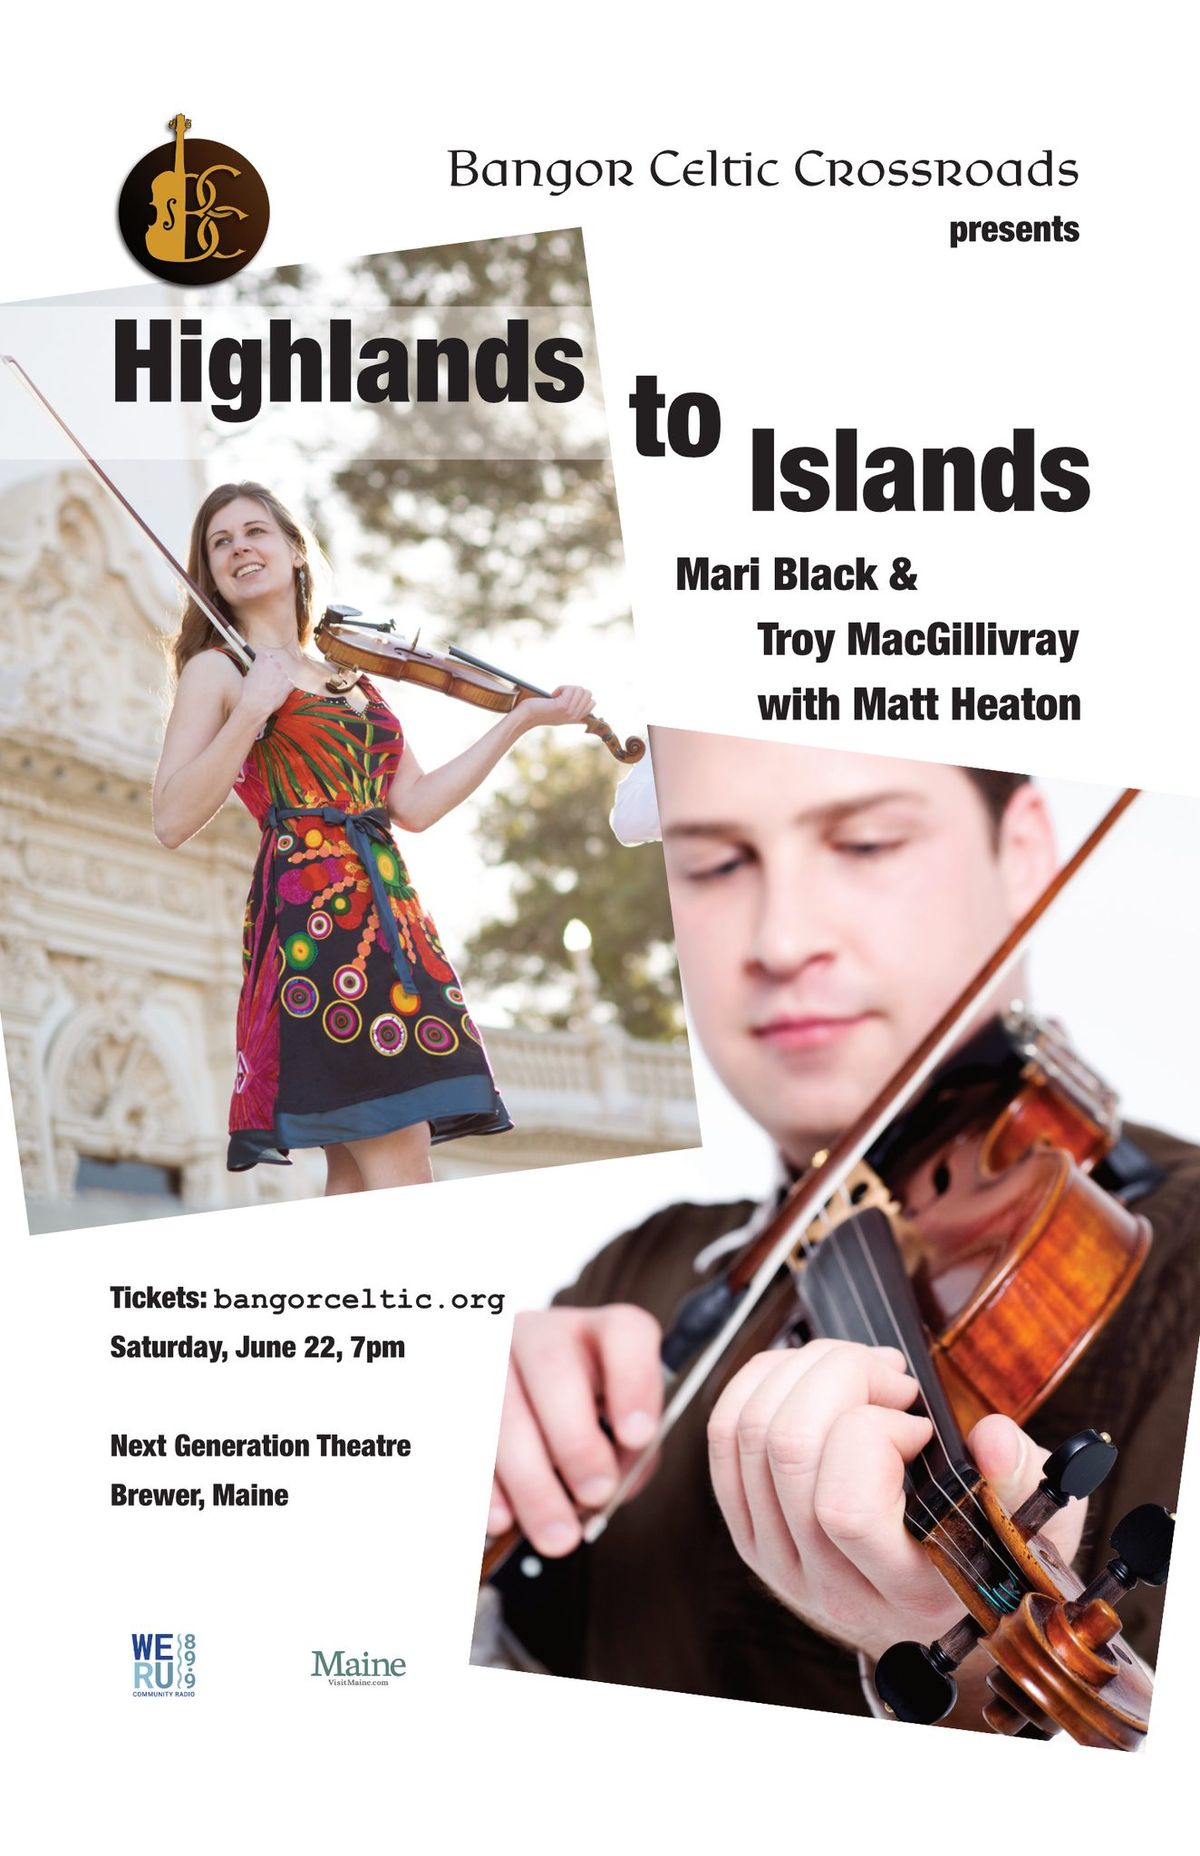 Highlands to Islands concert with Mari Black, Troy MacGillivray and Matt Heaton